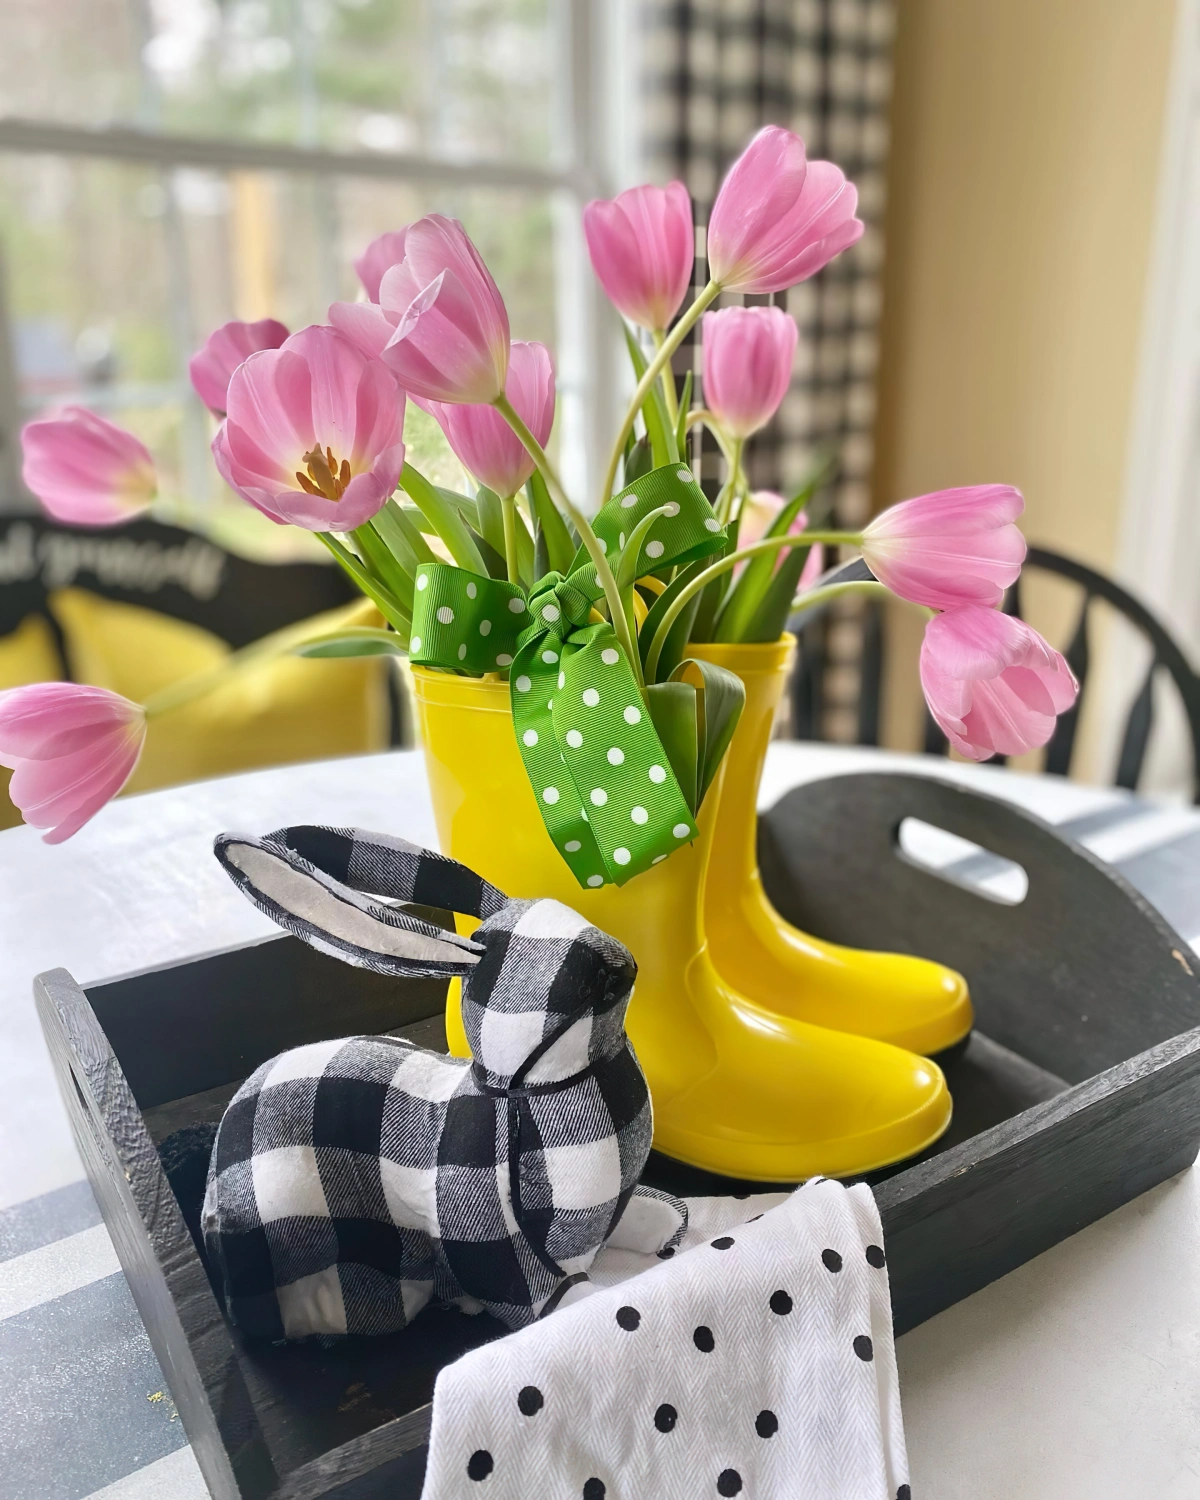 bottes jaunes ruban vert dots blancs bouquet tulipes figurine lapin plateau